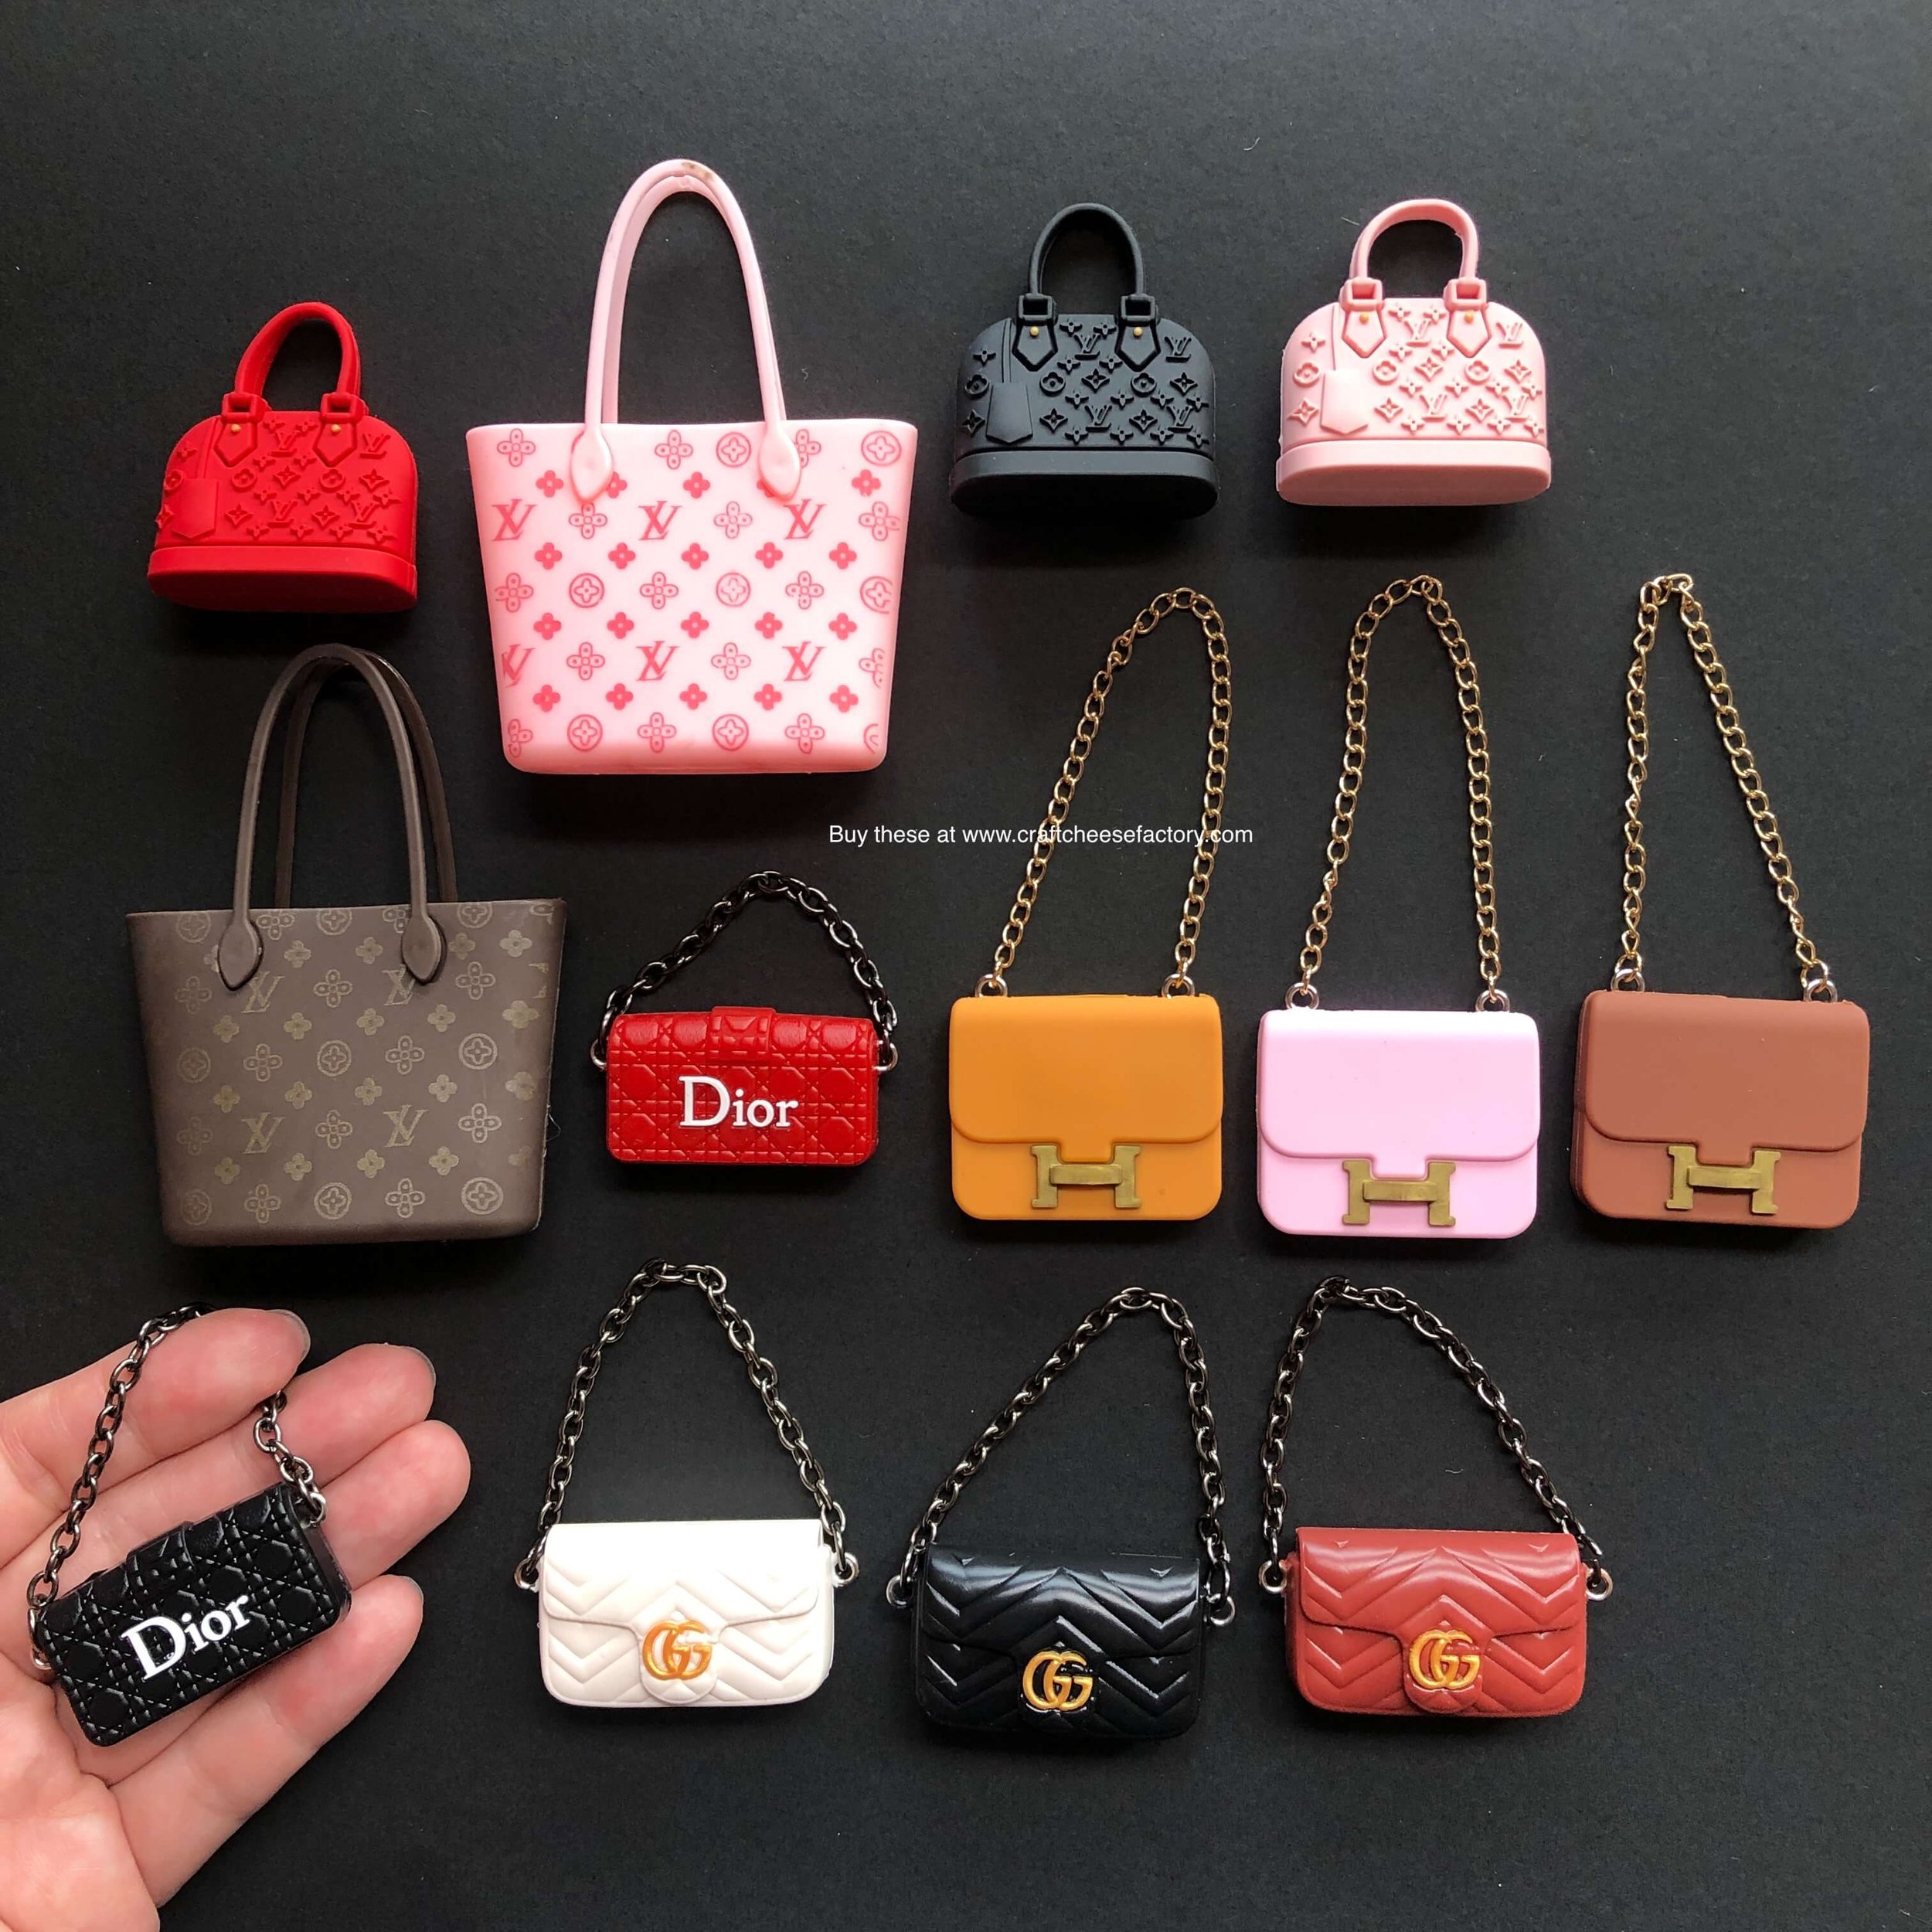 miniature chanel purse